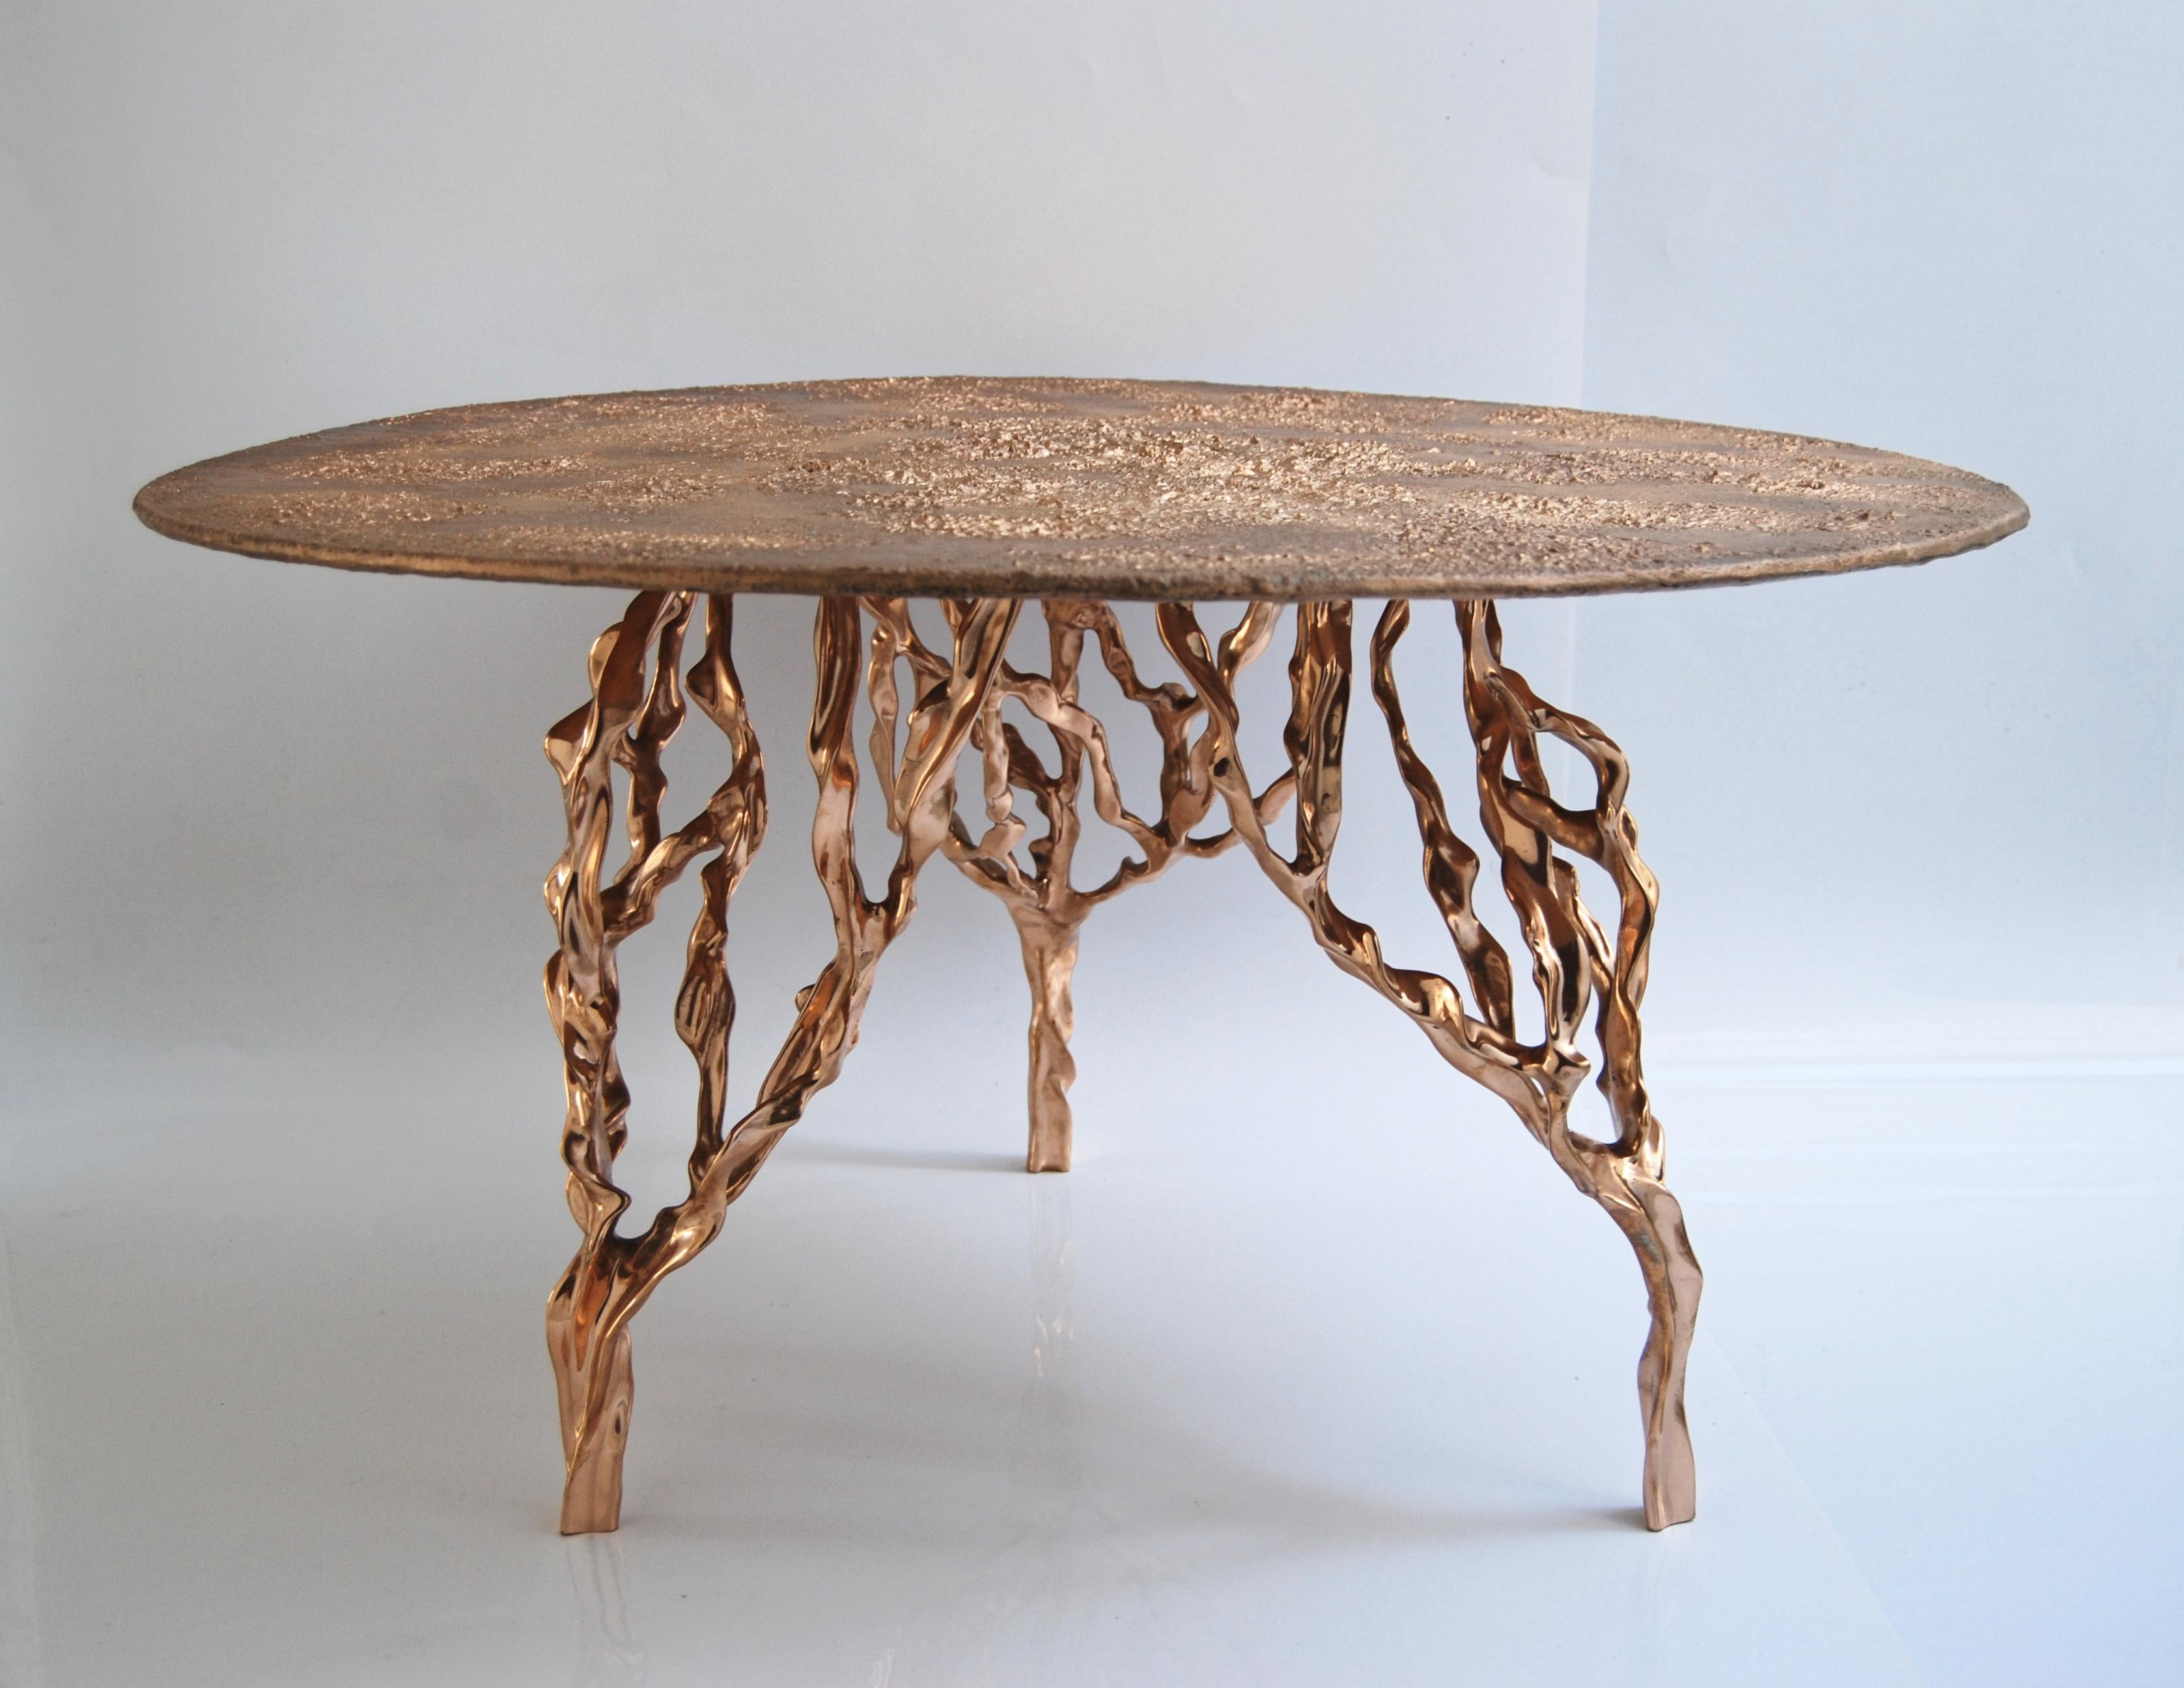 Modern Polished Bronze Table by FAKASAKA Design